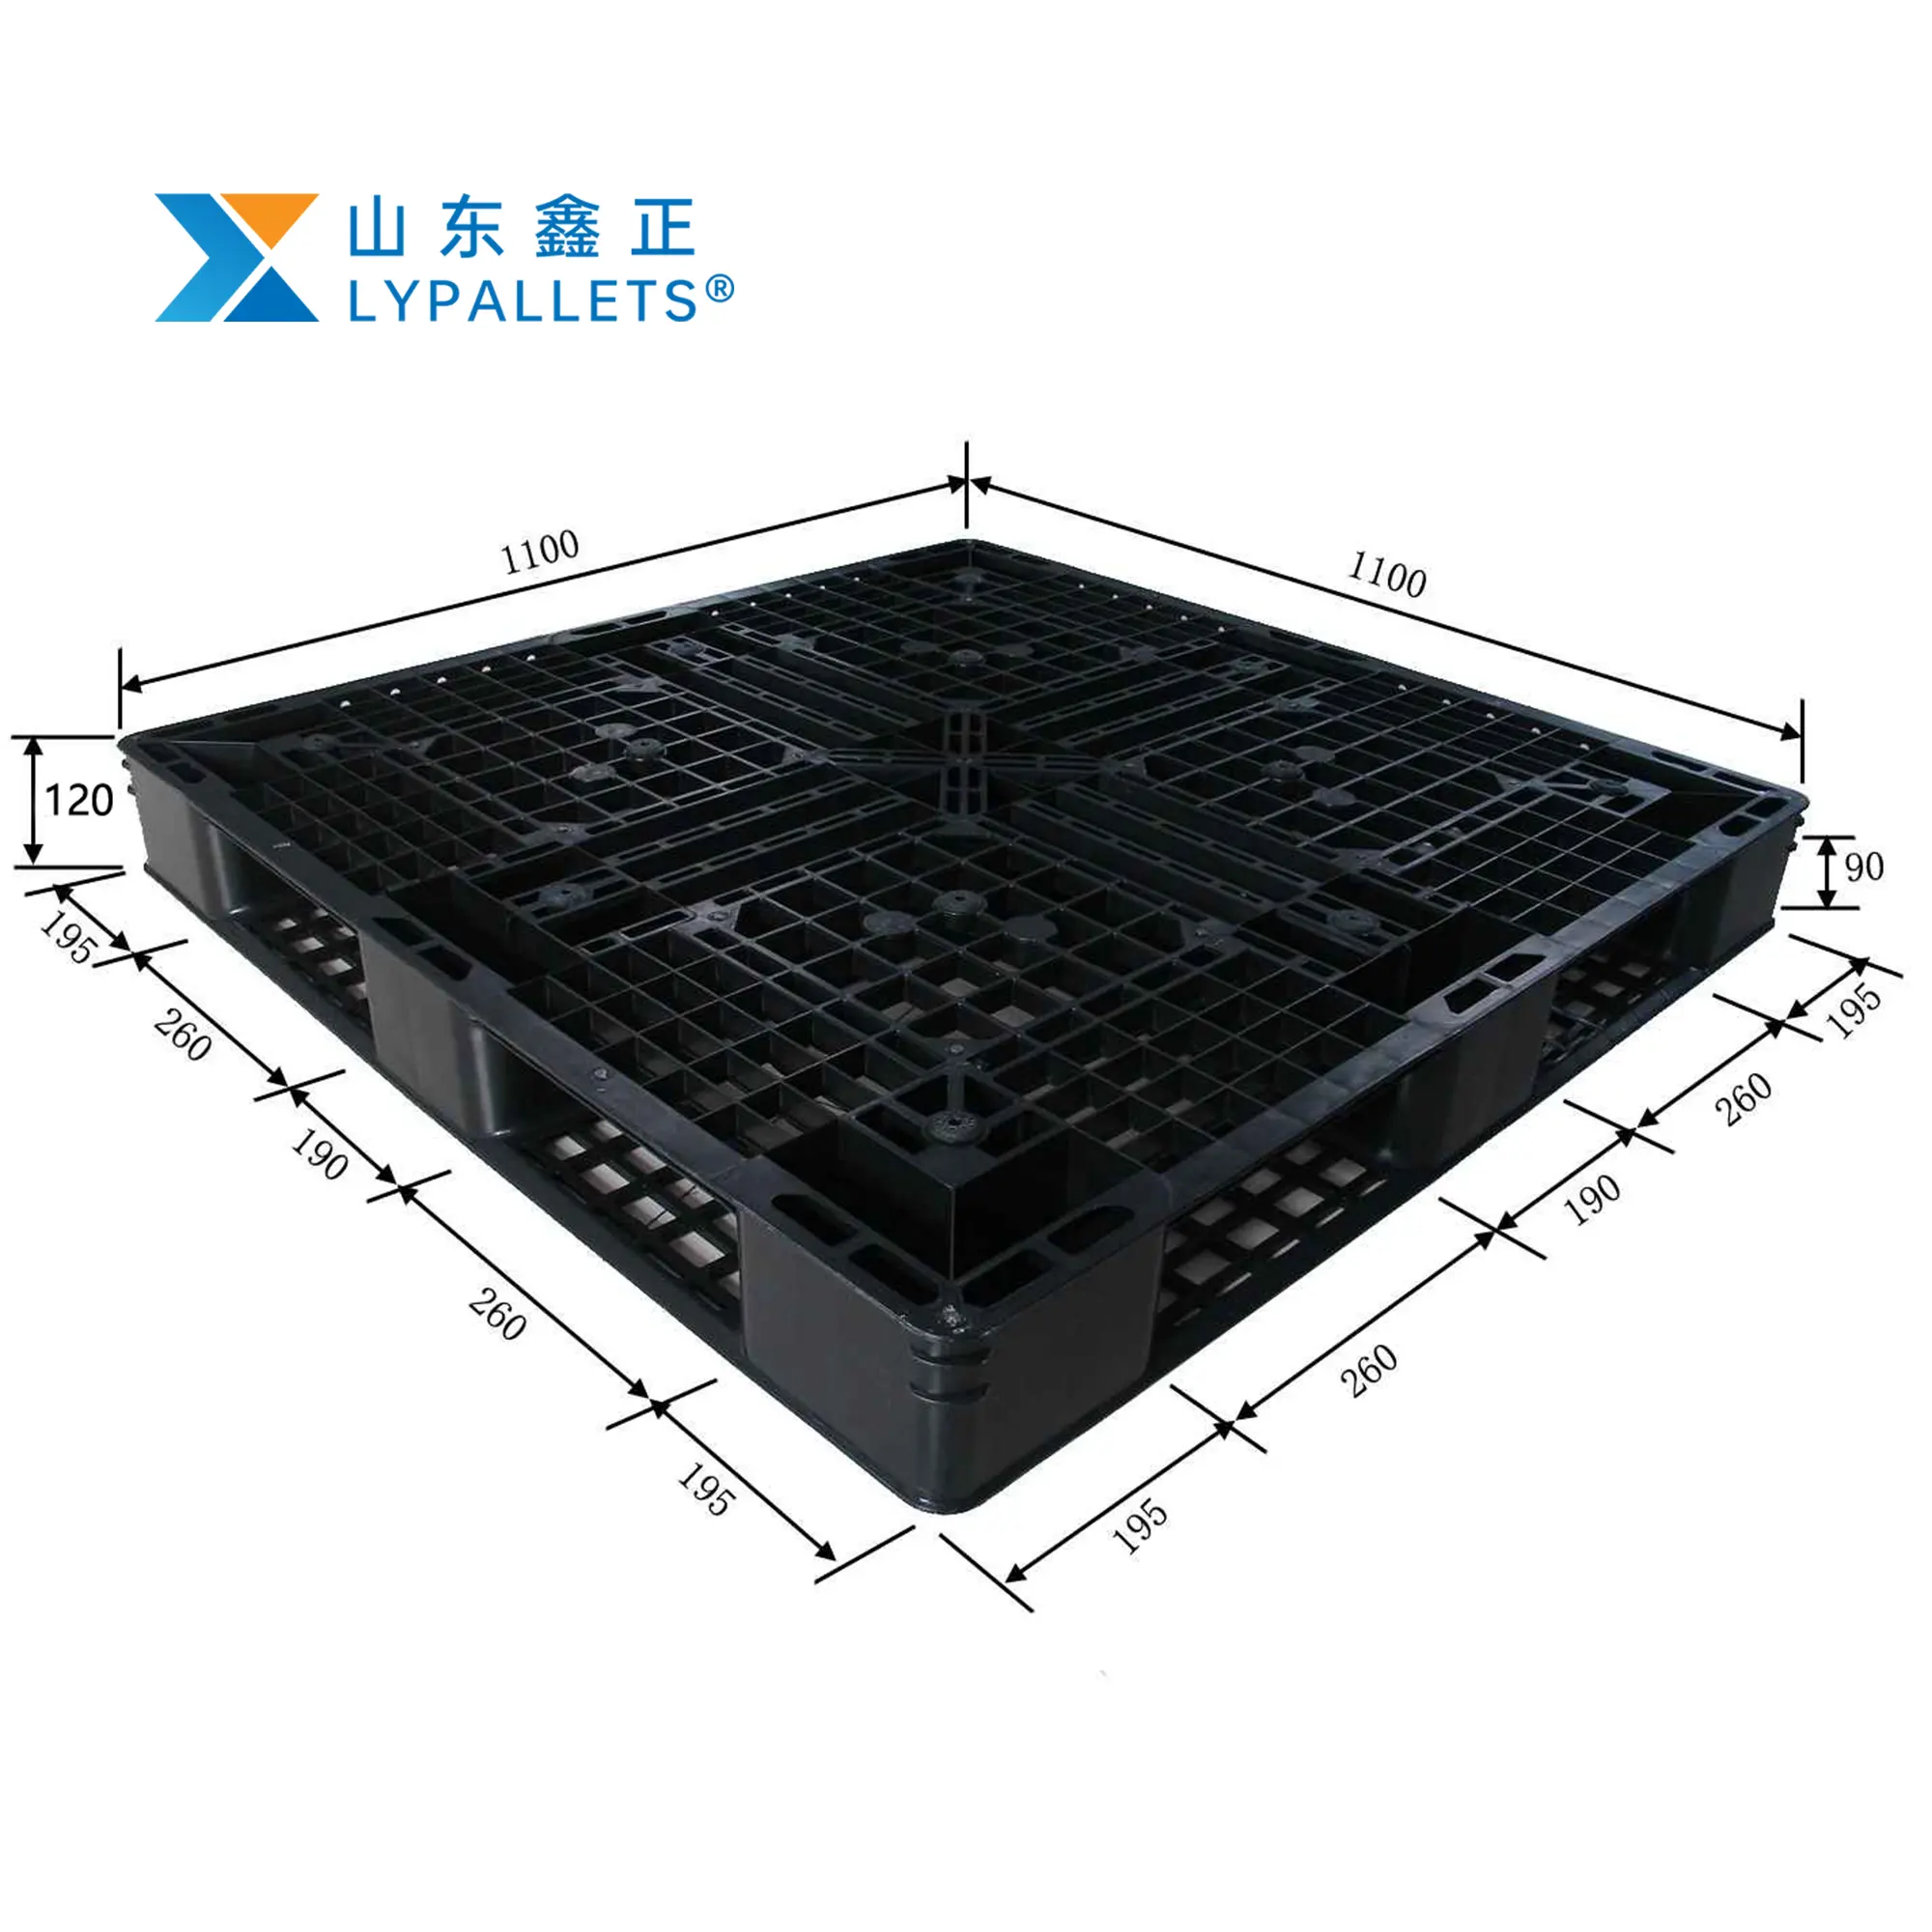 Toptan Lypallets 1100x1100 plastik palet siyah hdpe istiflenebilir endüstriyel tek yönlü ihracat plastik palet ile en iyi fiyat